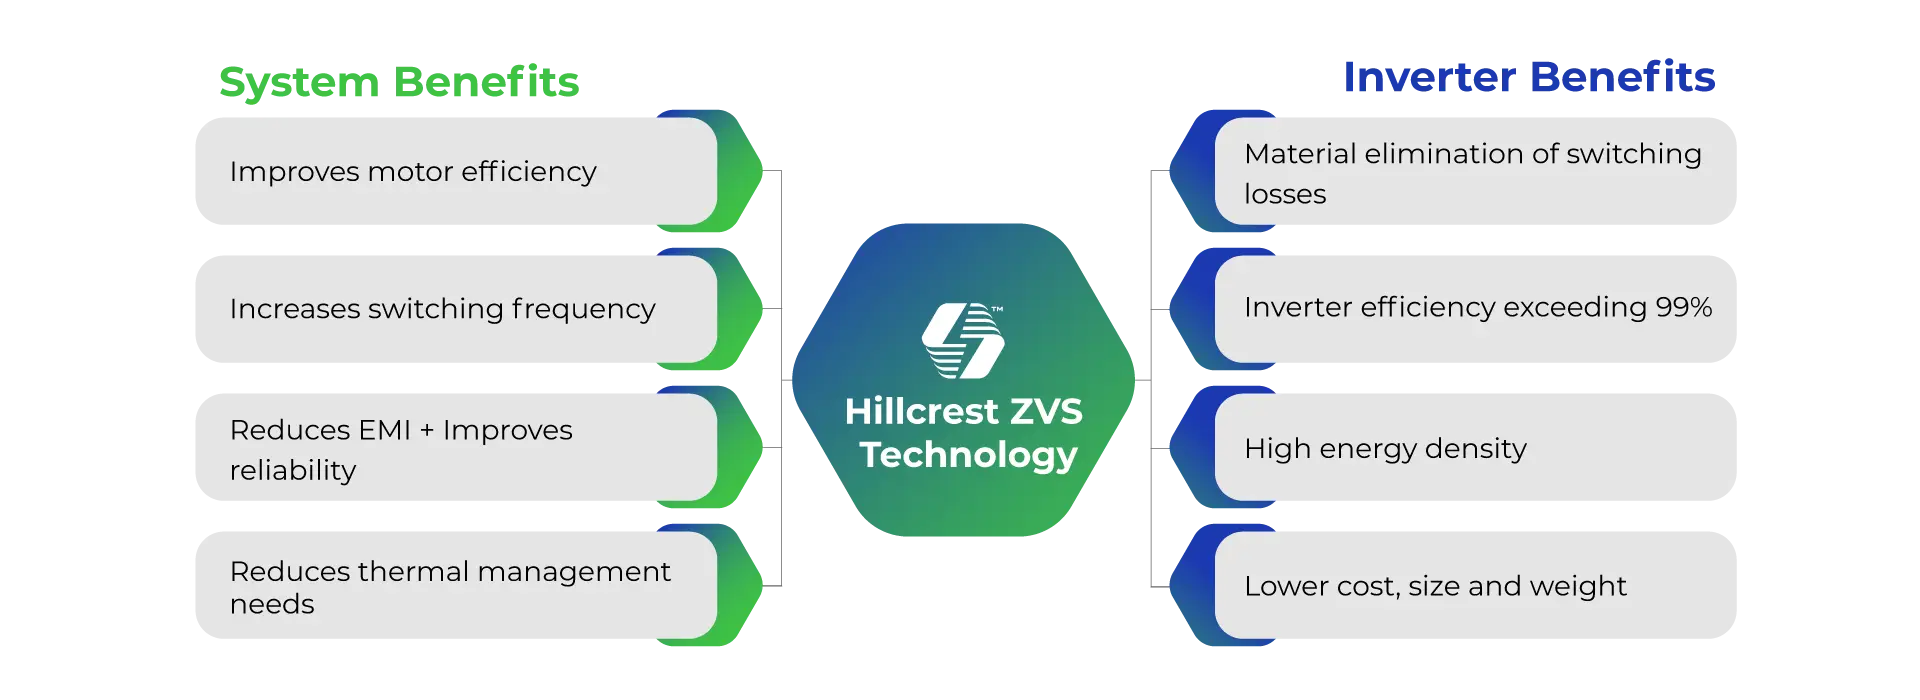 Hillcrest ZVS technology benefits on system level and inverter level